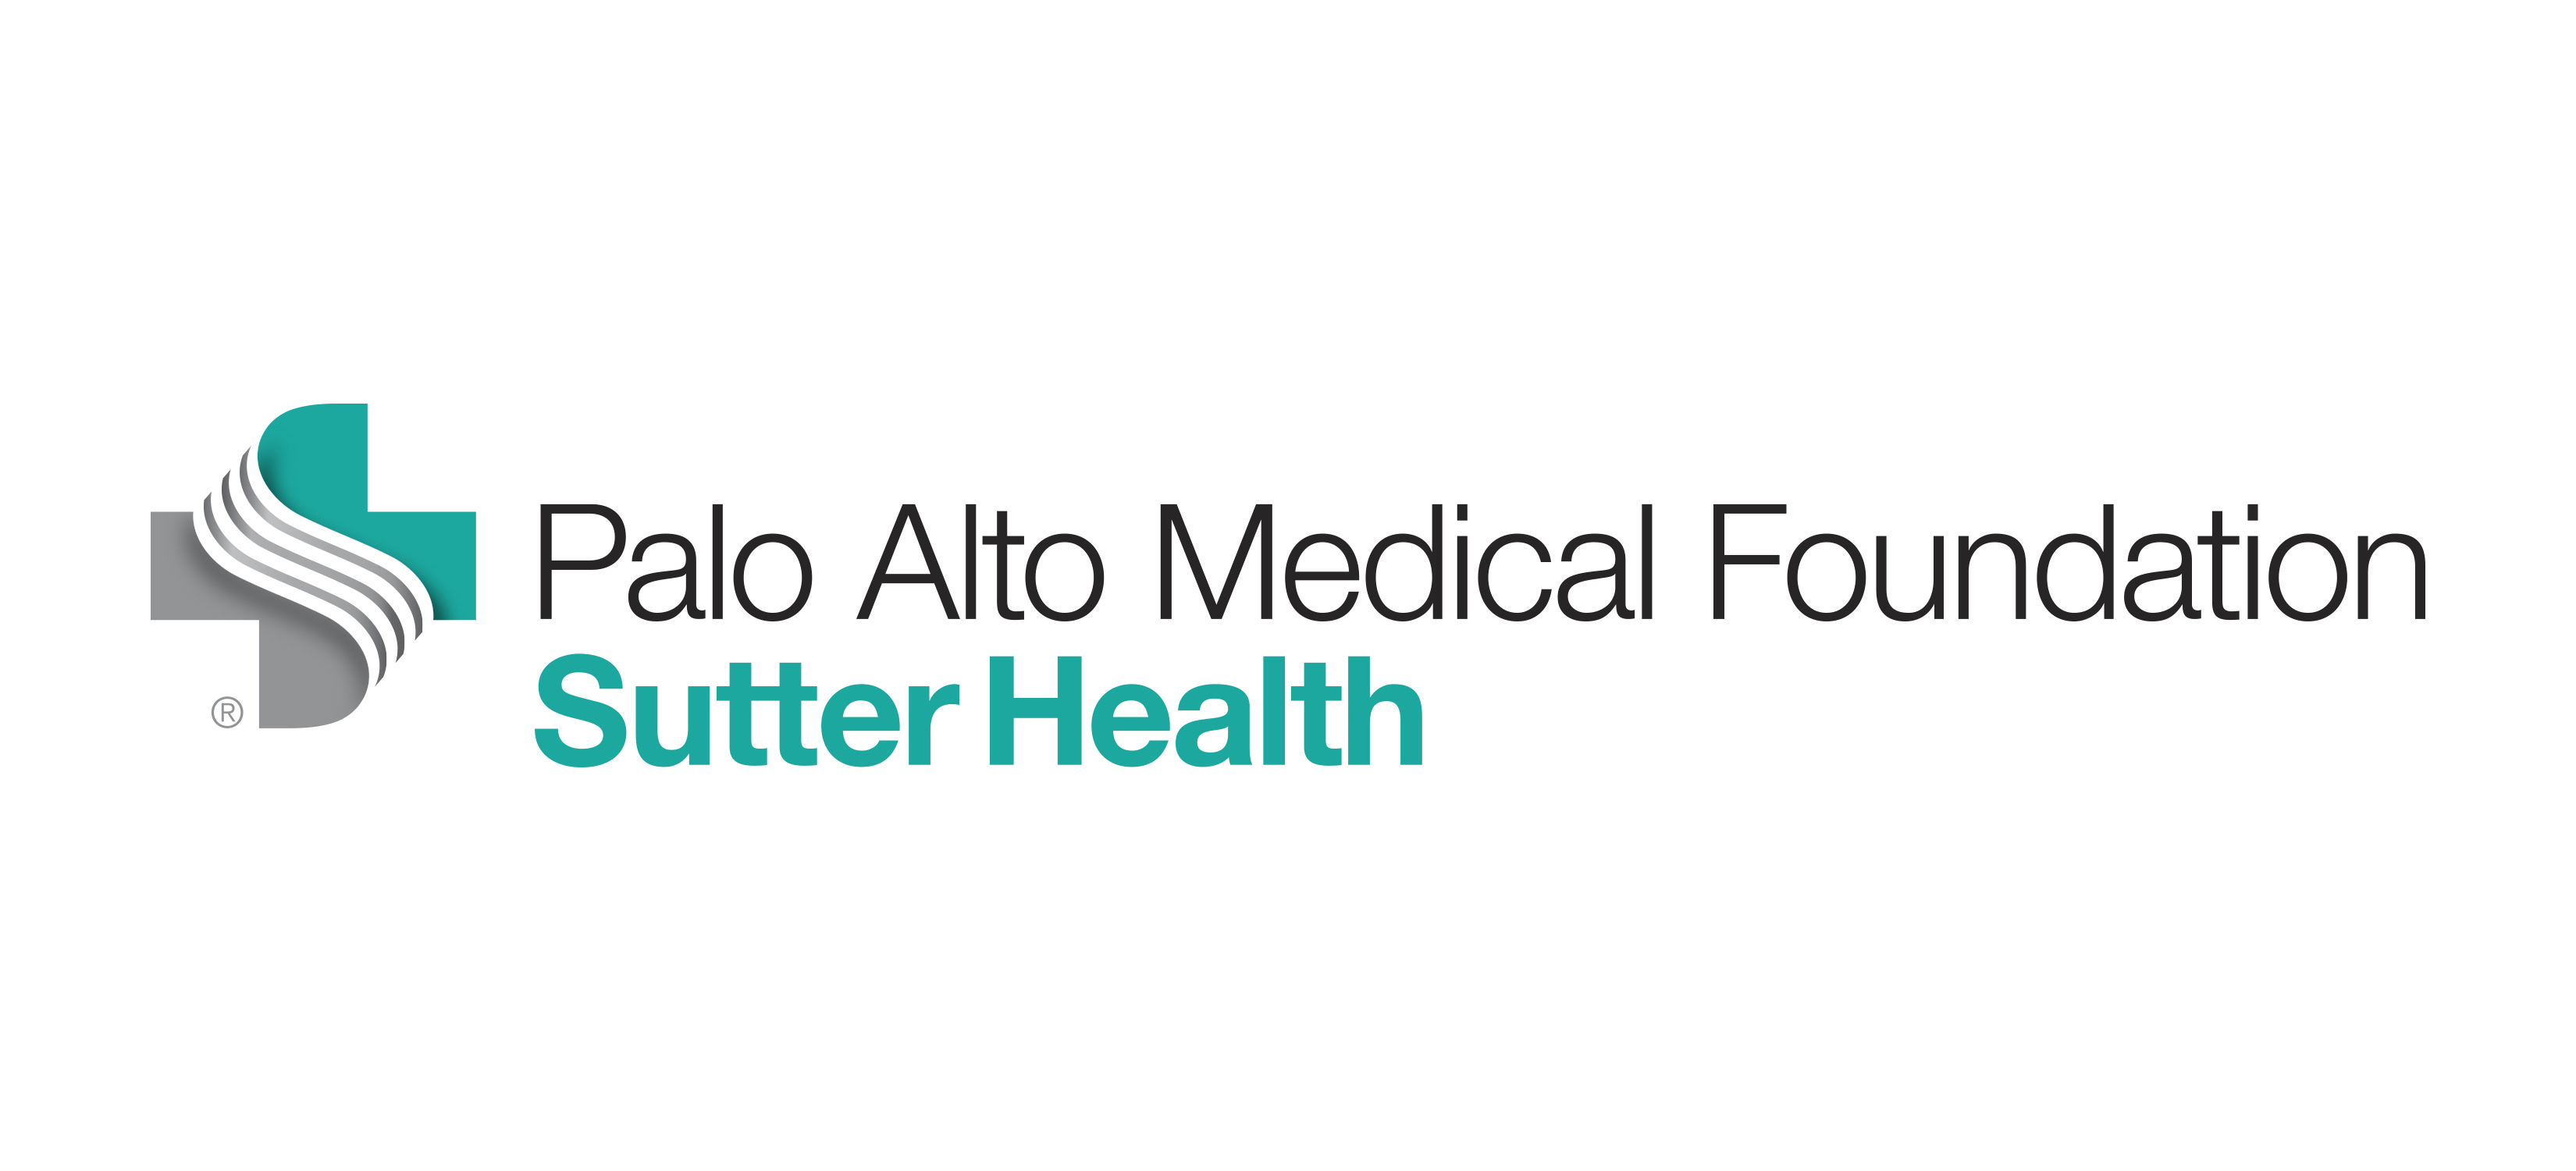 Palo Alto Medical Foundation